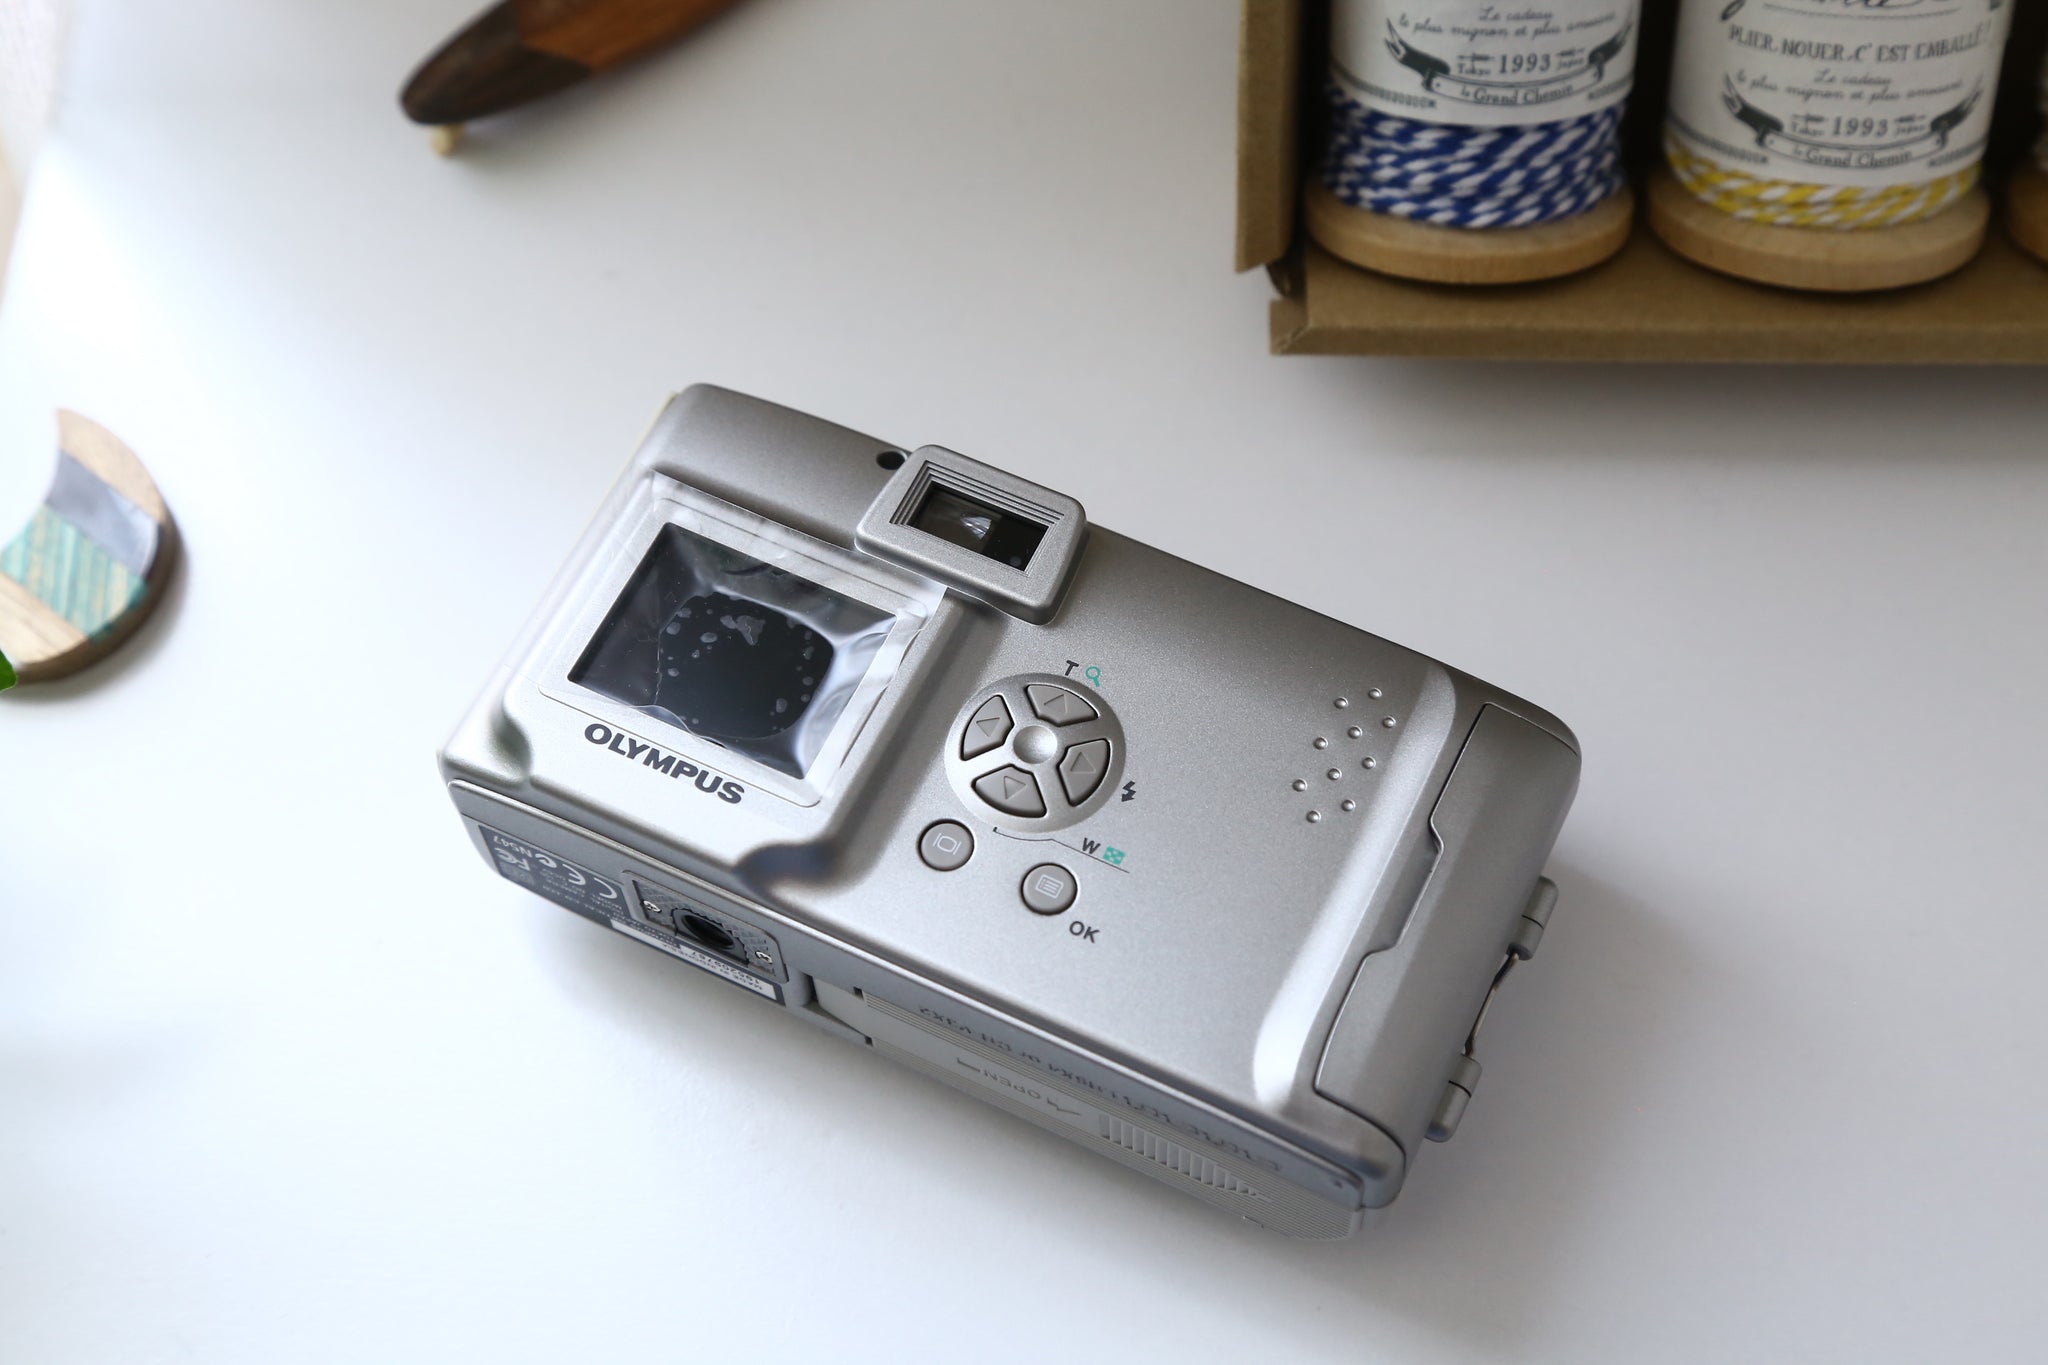 Canon IXY DIGITAL 初代 オールドコンデジ - デジタルカメラ